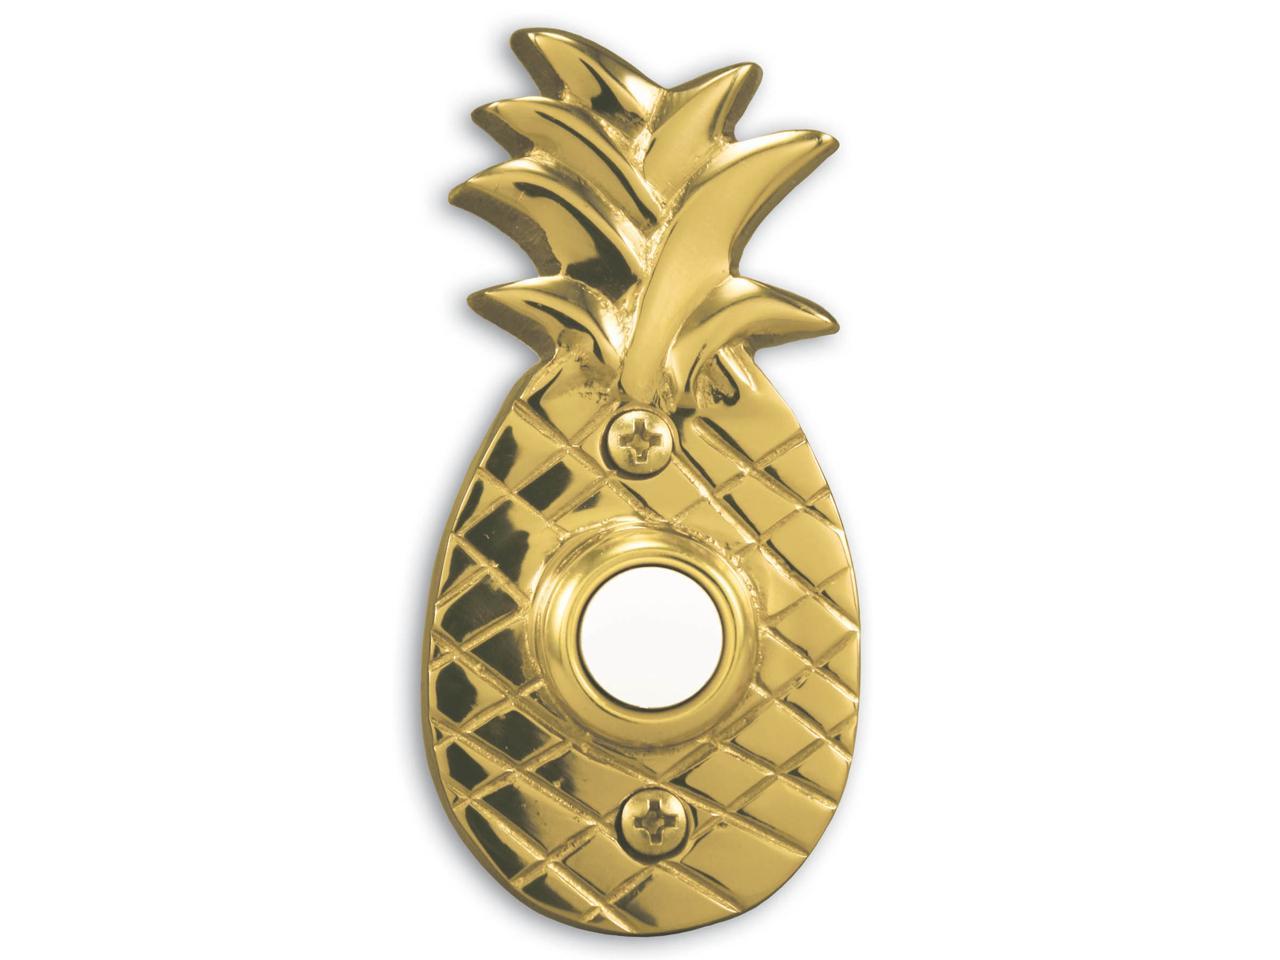 Door Bell Brass Pineapple lighted Button Doorbell solidbrass Wired Brand New!!! 